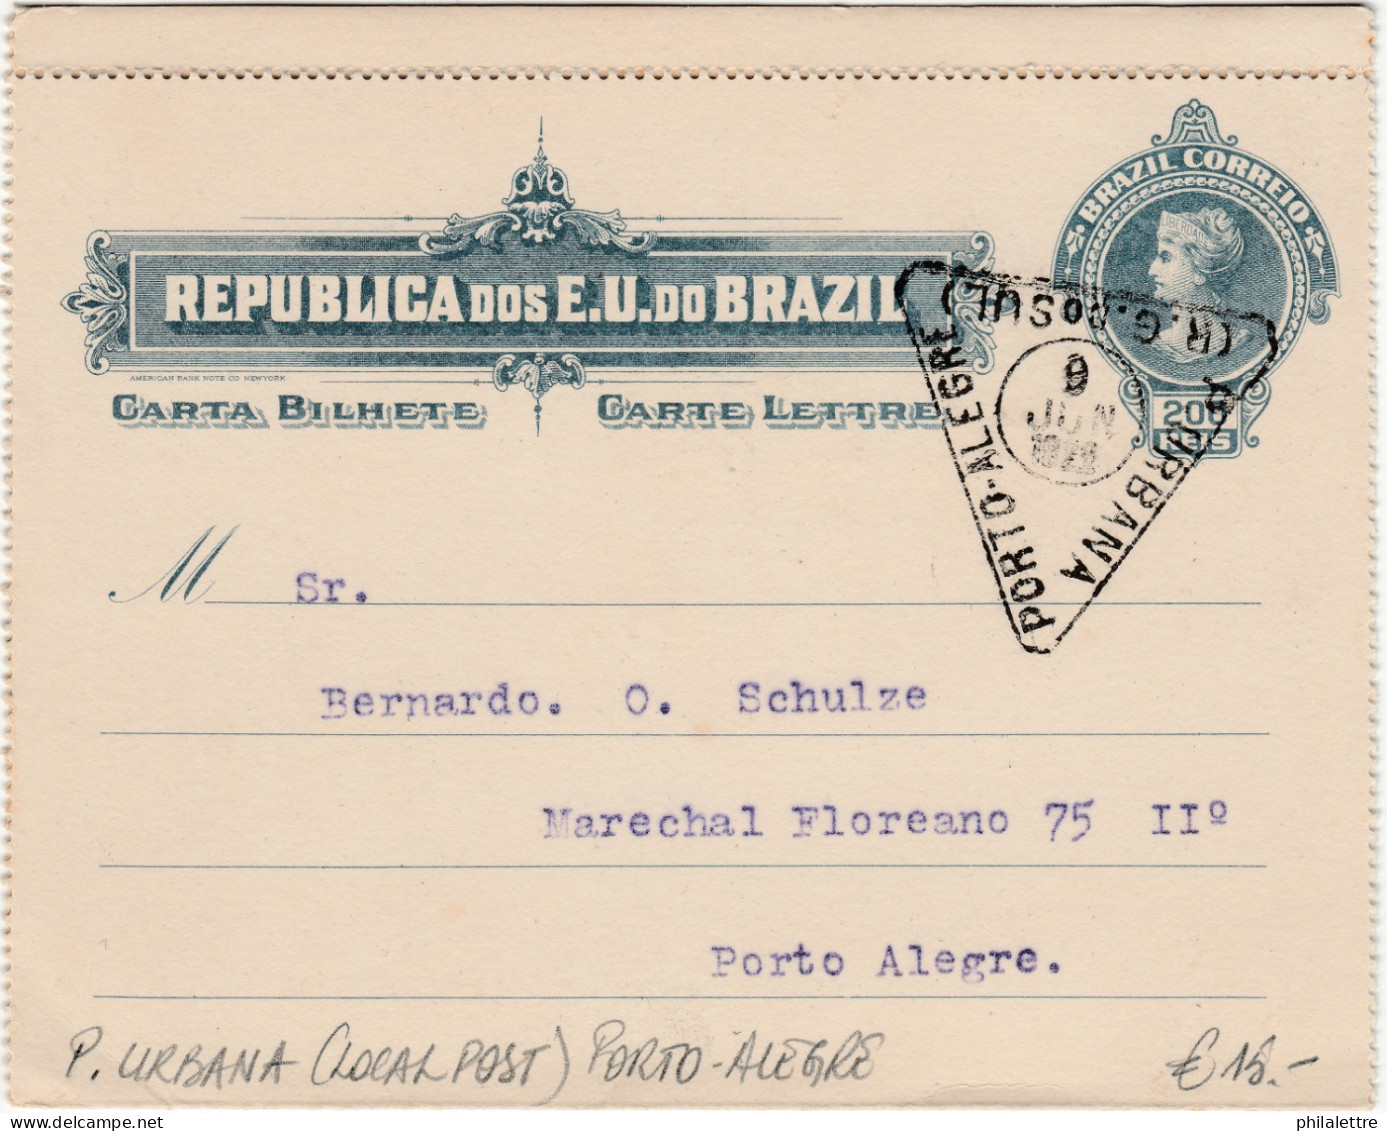 BRAZIL 1922 200 Reis Letter-Card Used In PORTO-ALEGRE Cancelled "P. URBANA" (City Post) - Briefe U. Dokumente